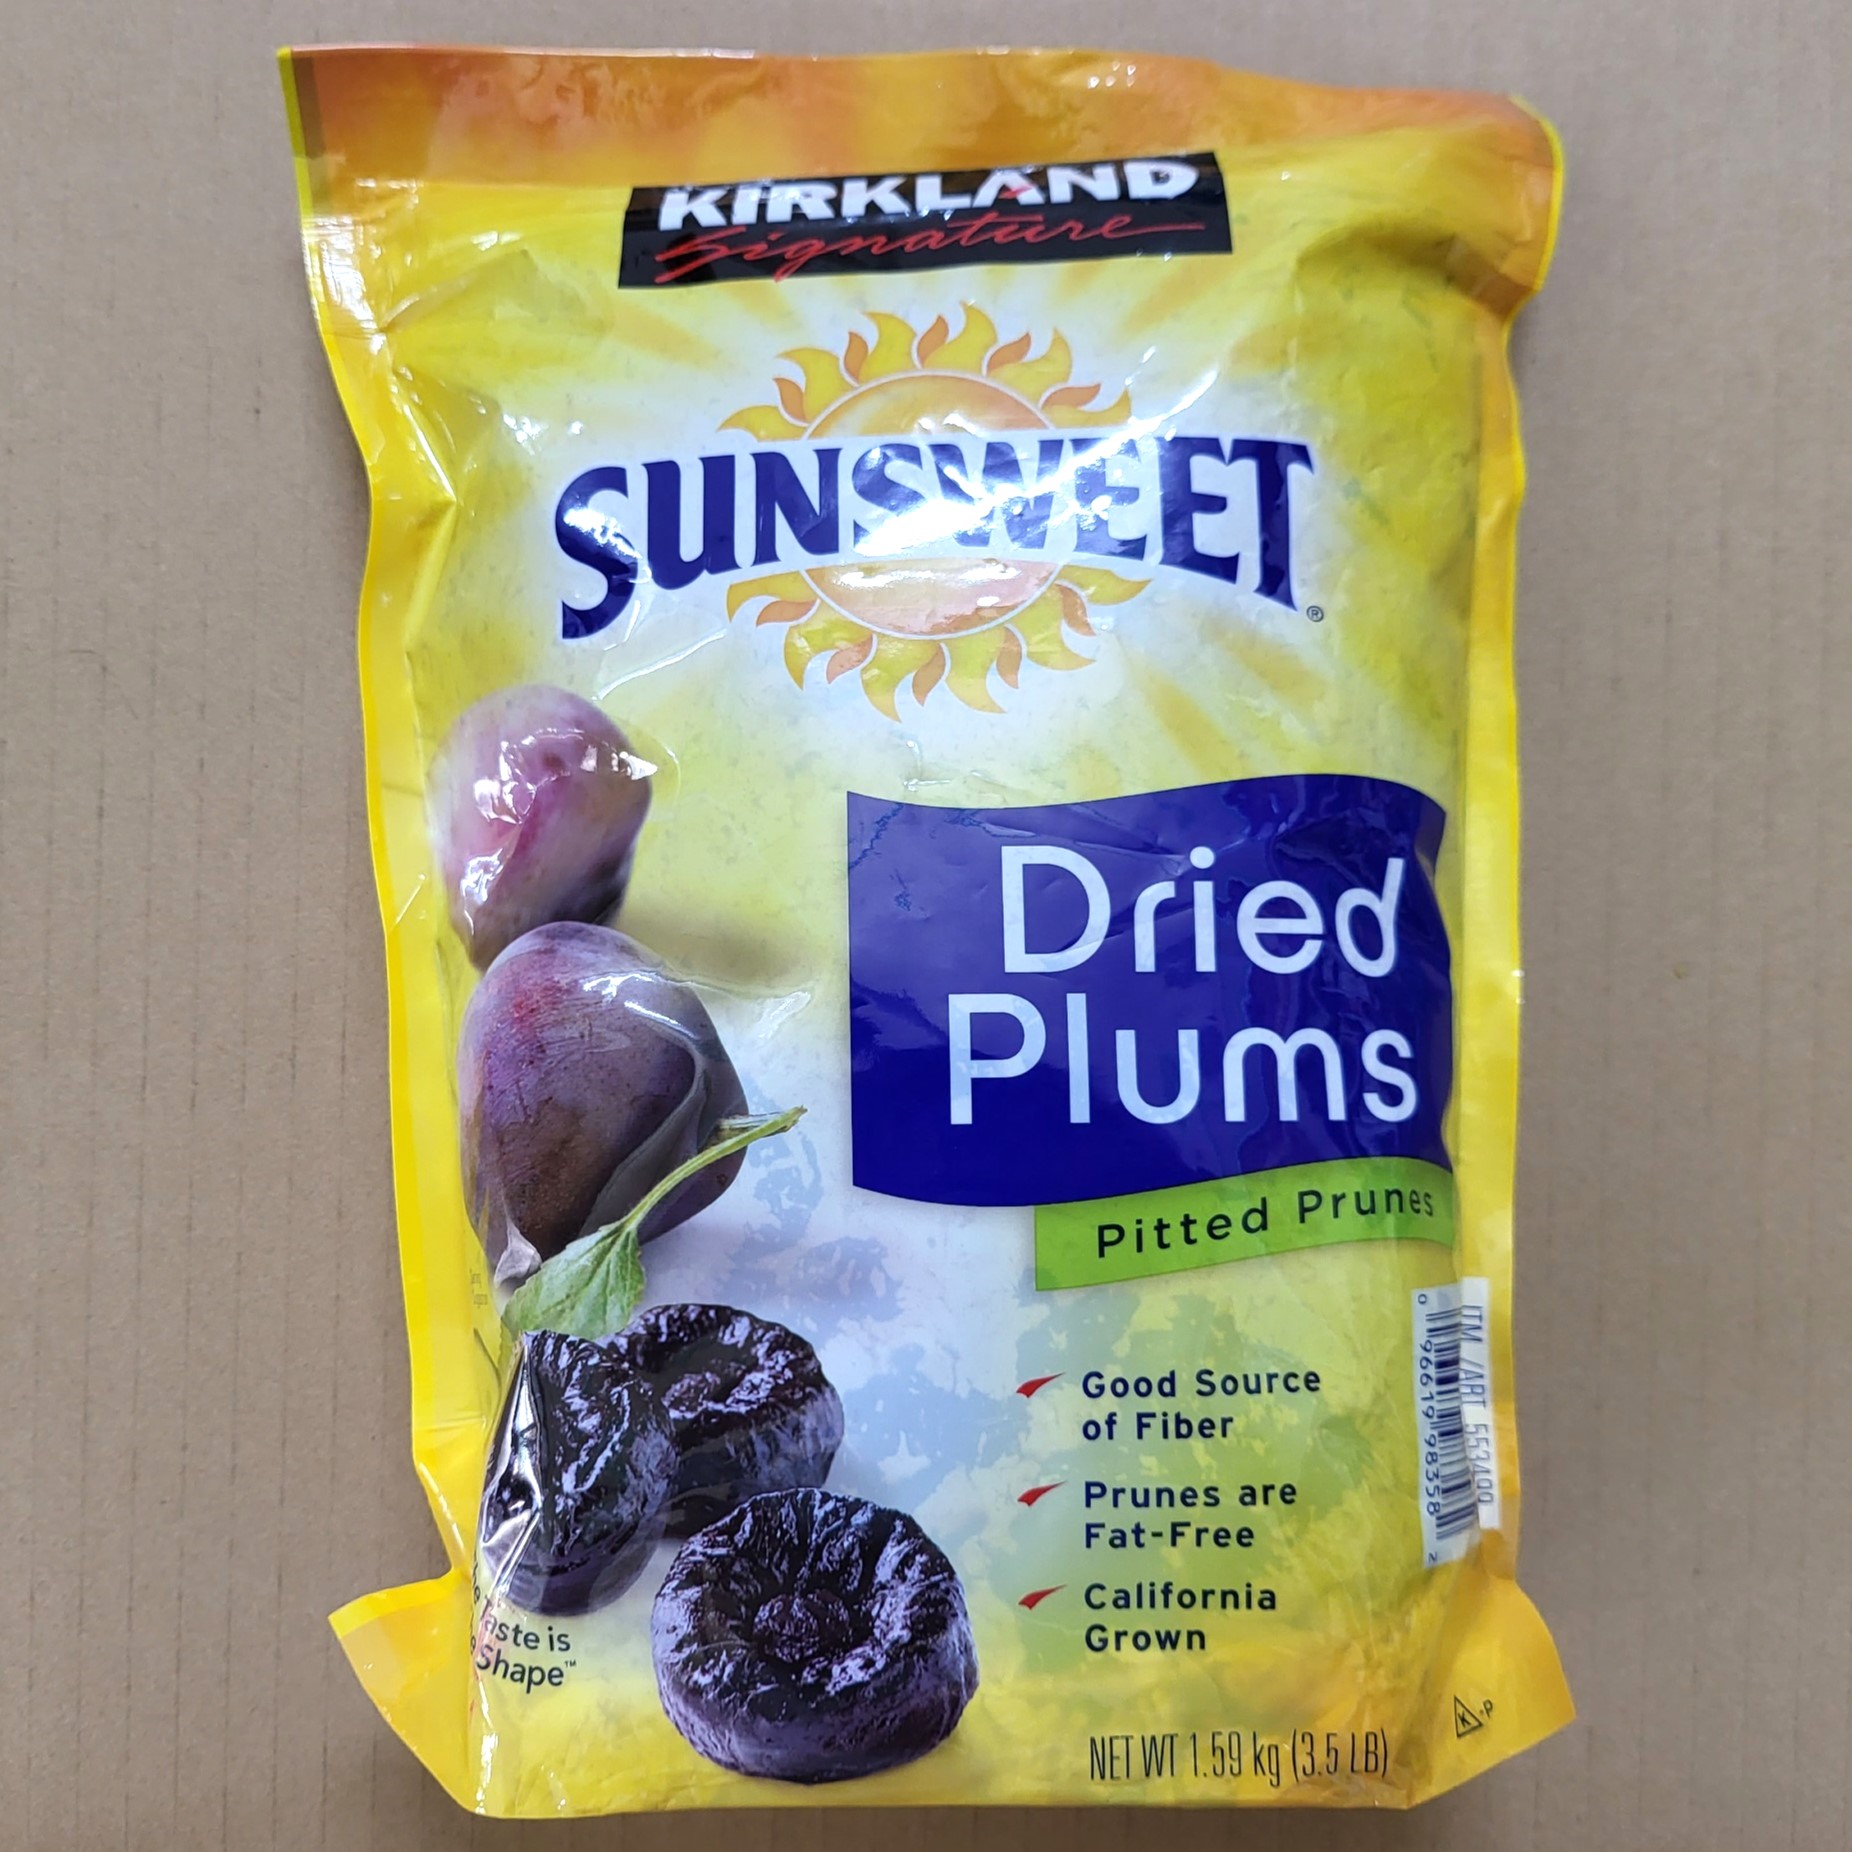 Túi 1.59 Kg QUẢ MẬN SẤY KIRKLAND USA SUNSWEET Dried Plums Pitted Prunes